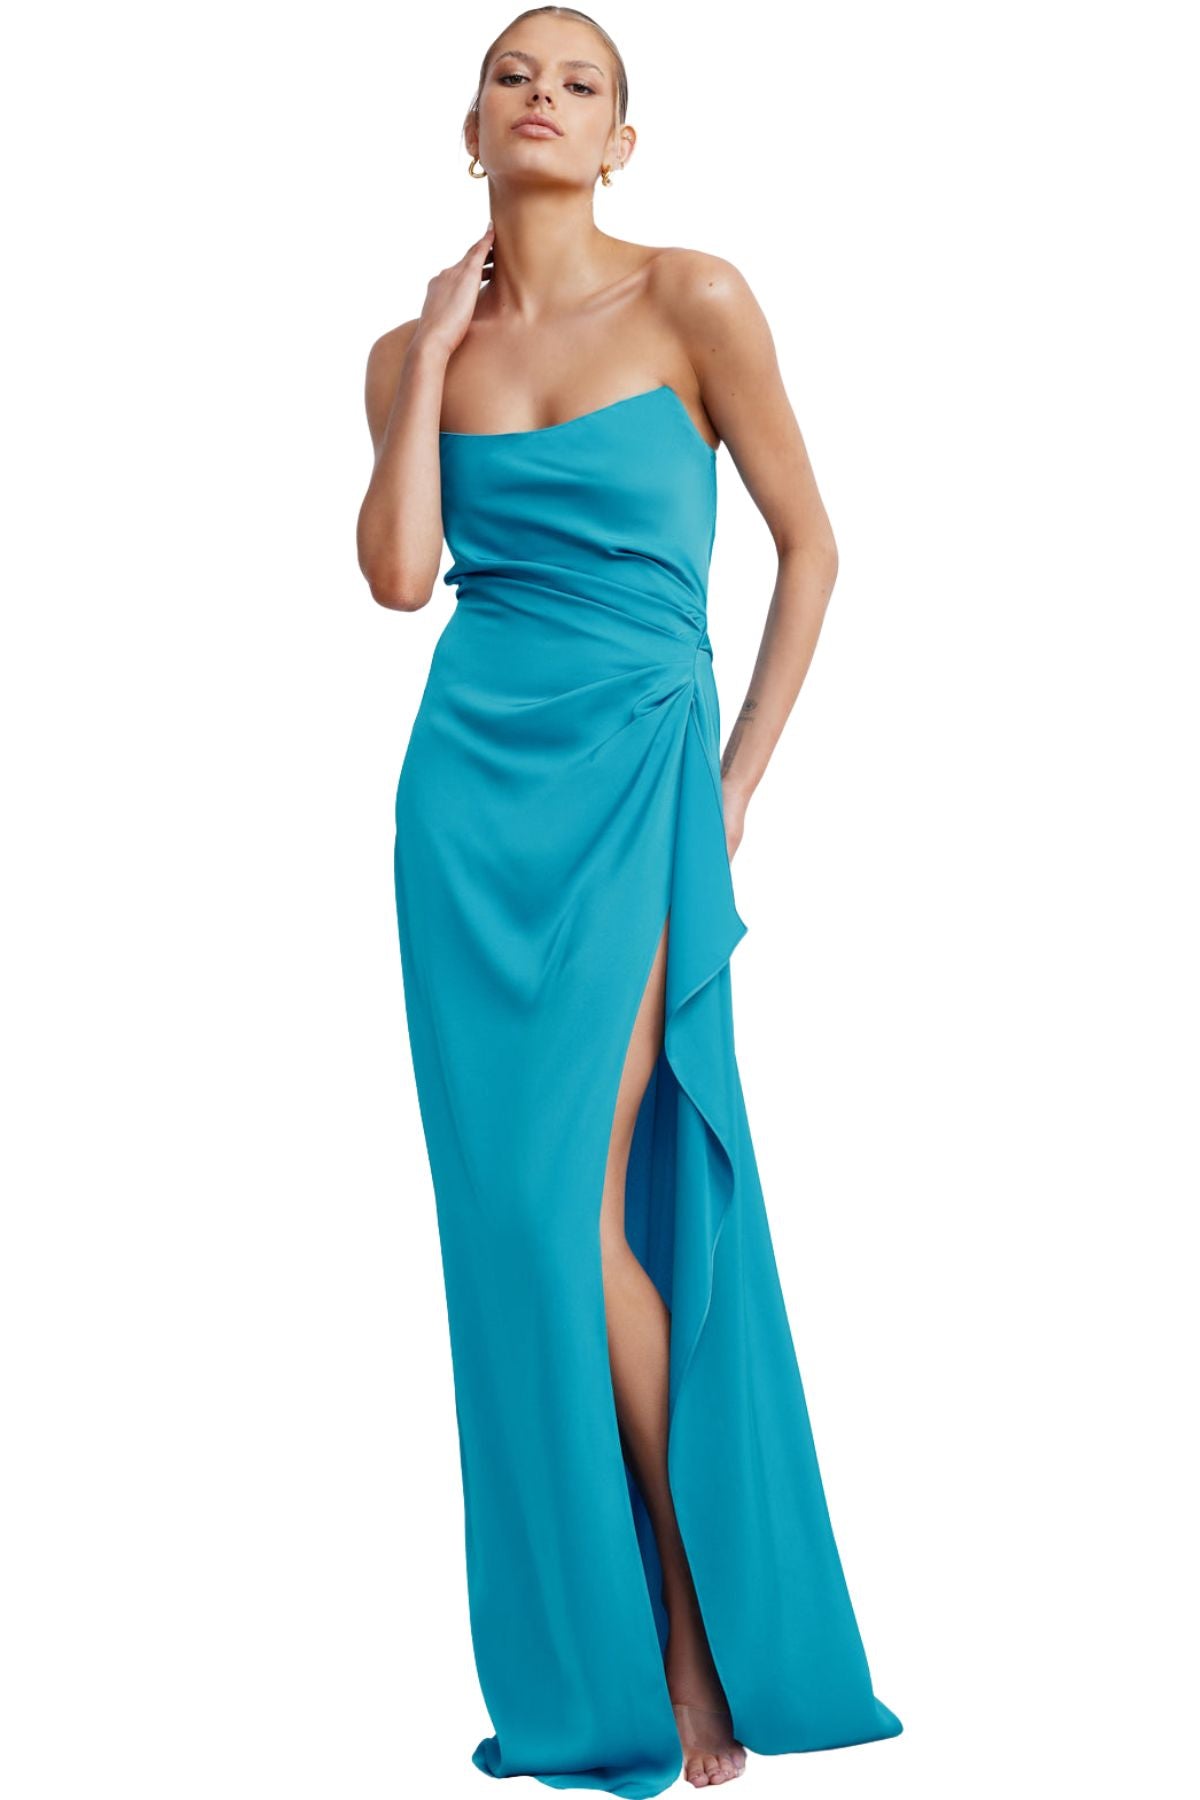 Lexi LEXI Alzira Dress (Teal) - RRP $379 - USETHISFORWEBSITEPRODUCT_6.jpg